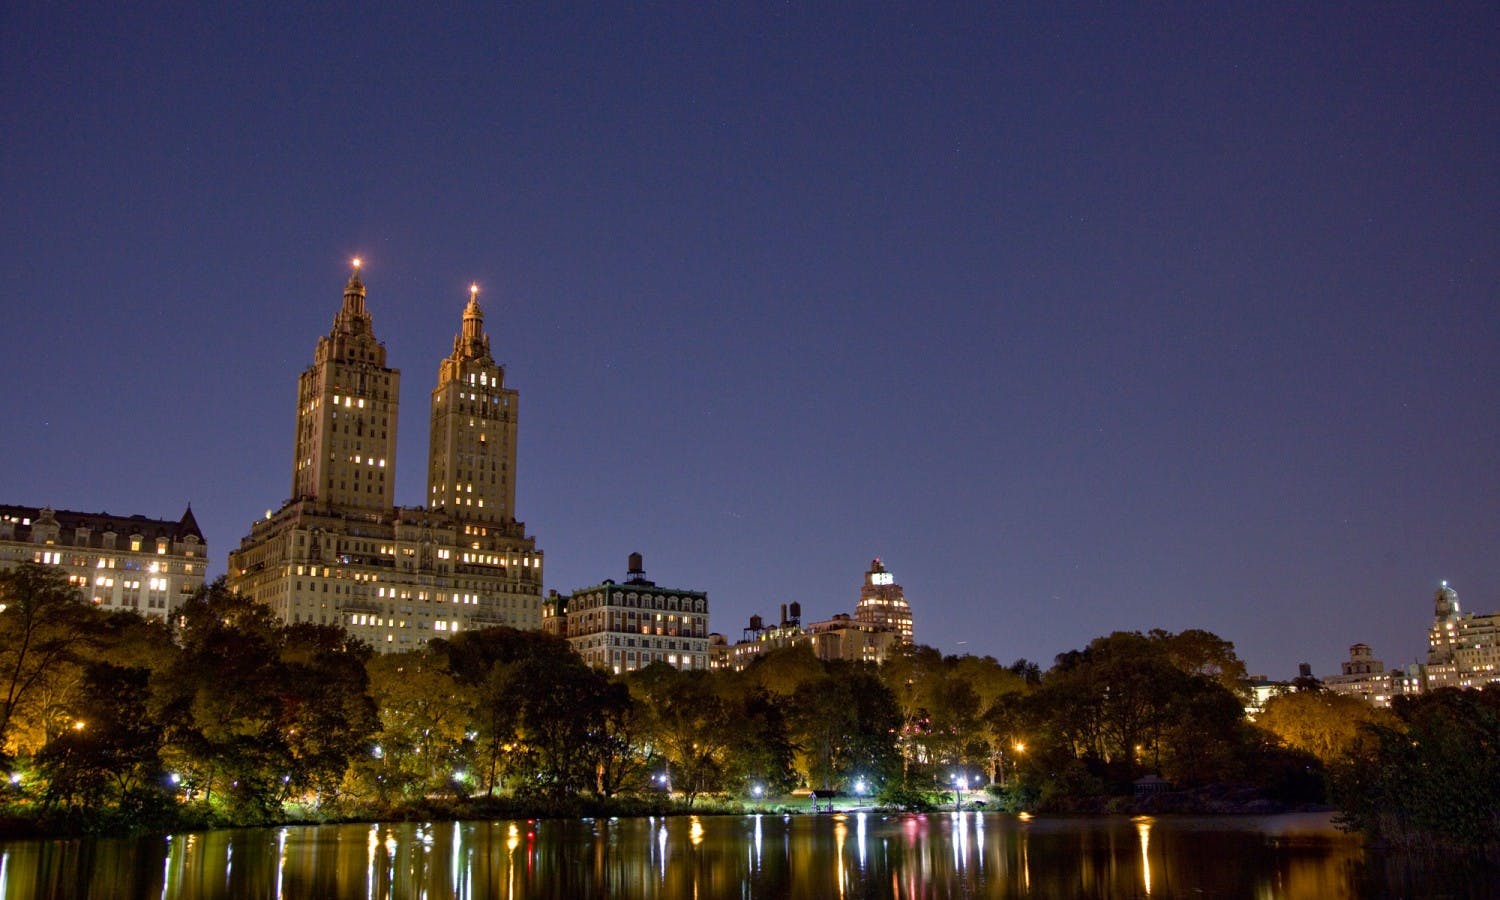 Central Park by night safari de fotos